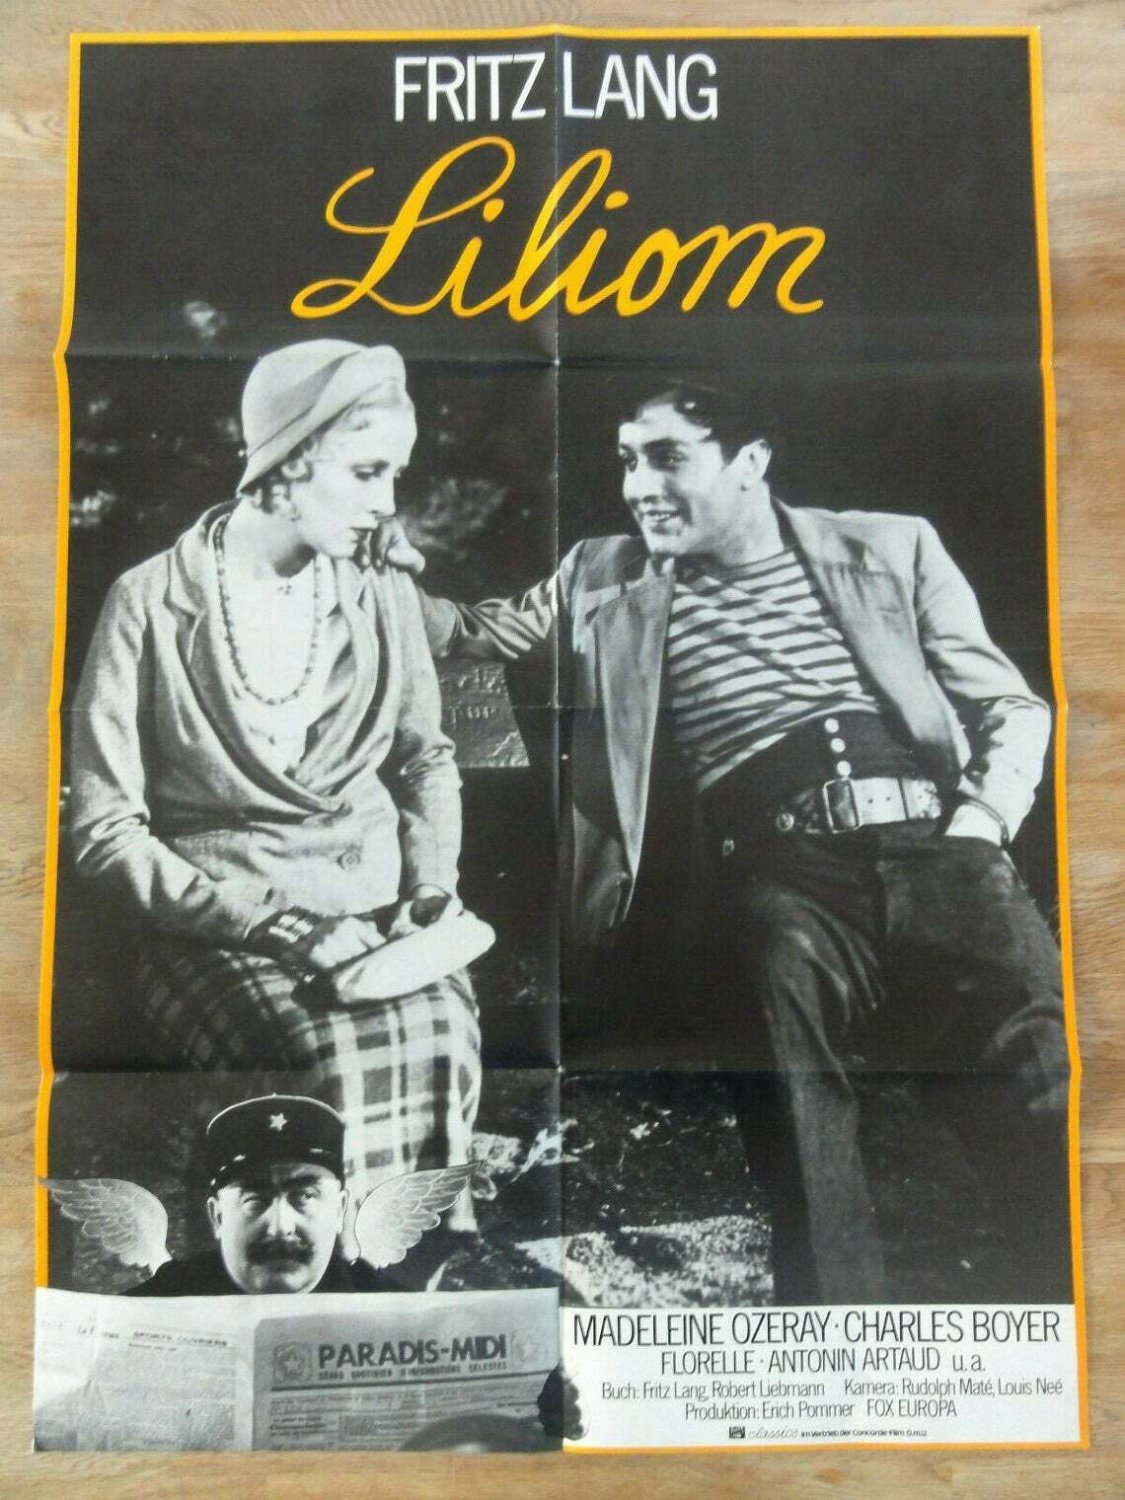 Liliom, Charles Boyer, Madeleine Ozeray, Fritz Lang, Cinema Poster, rr 1973